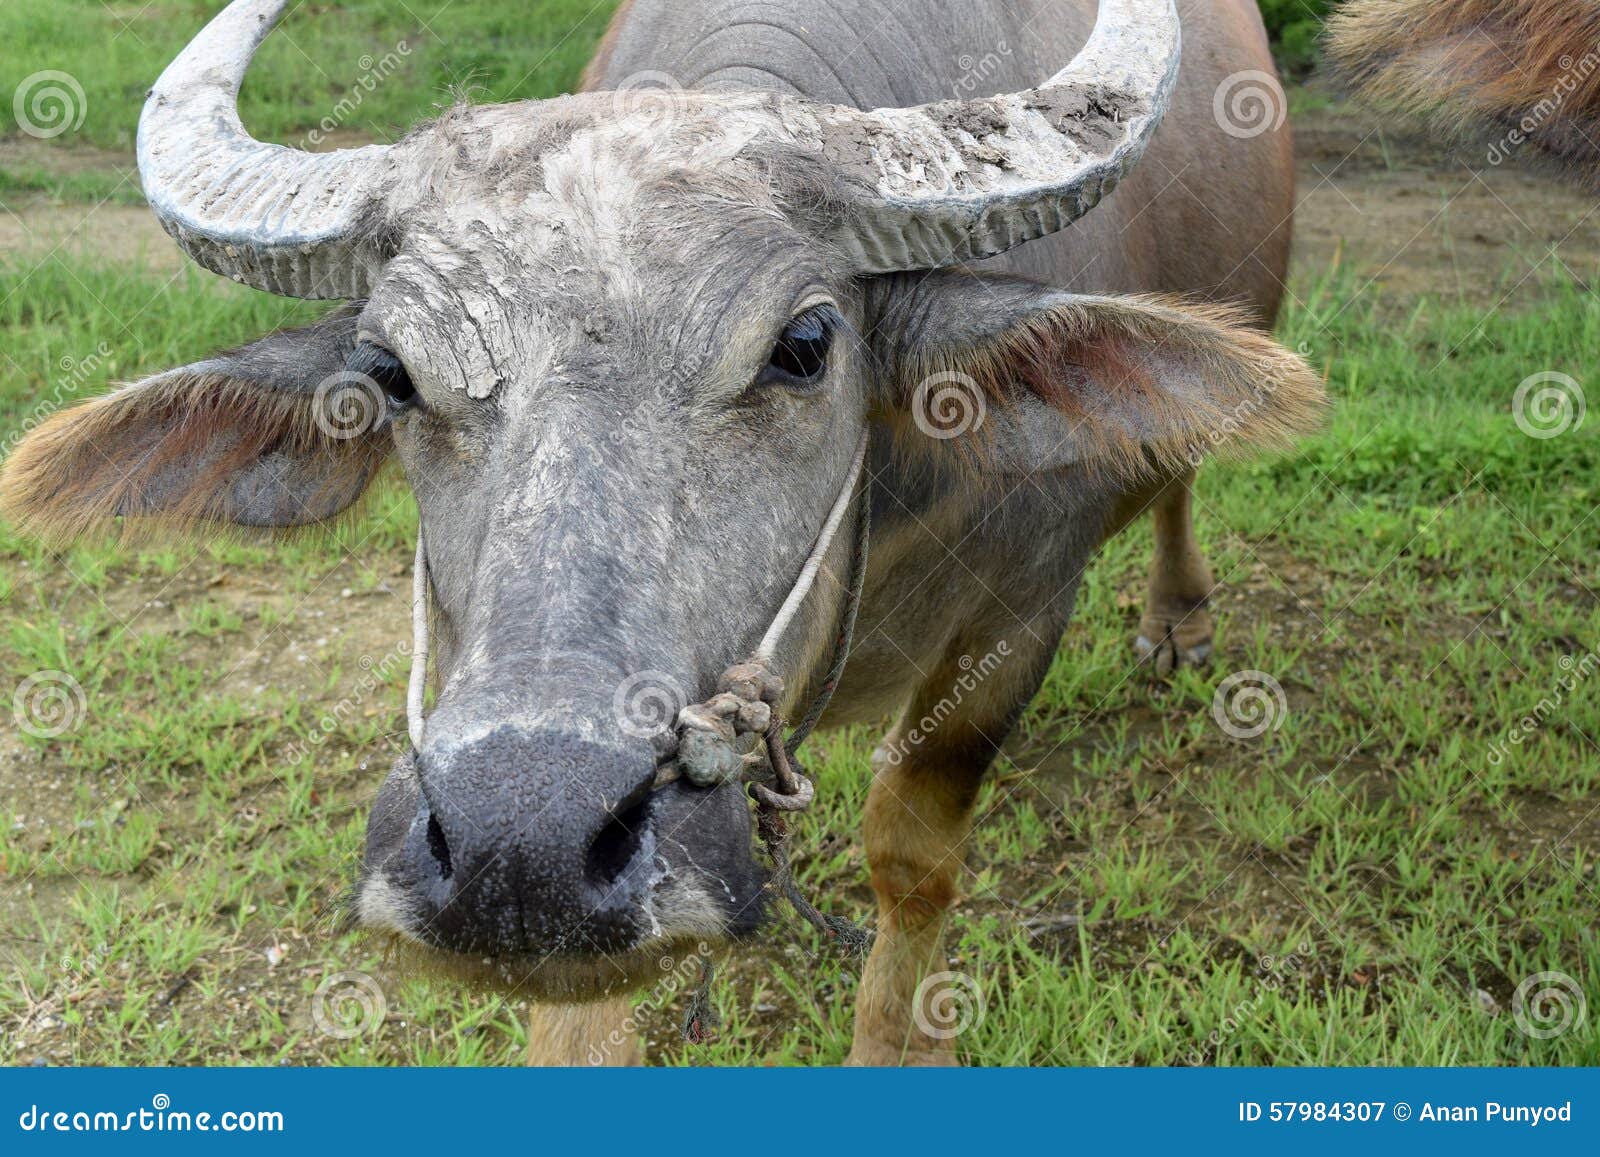 head stock image. Image of bovine, african, - 57984307